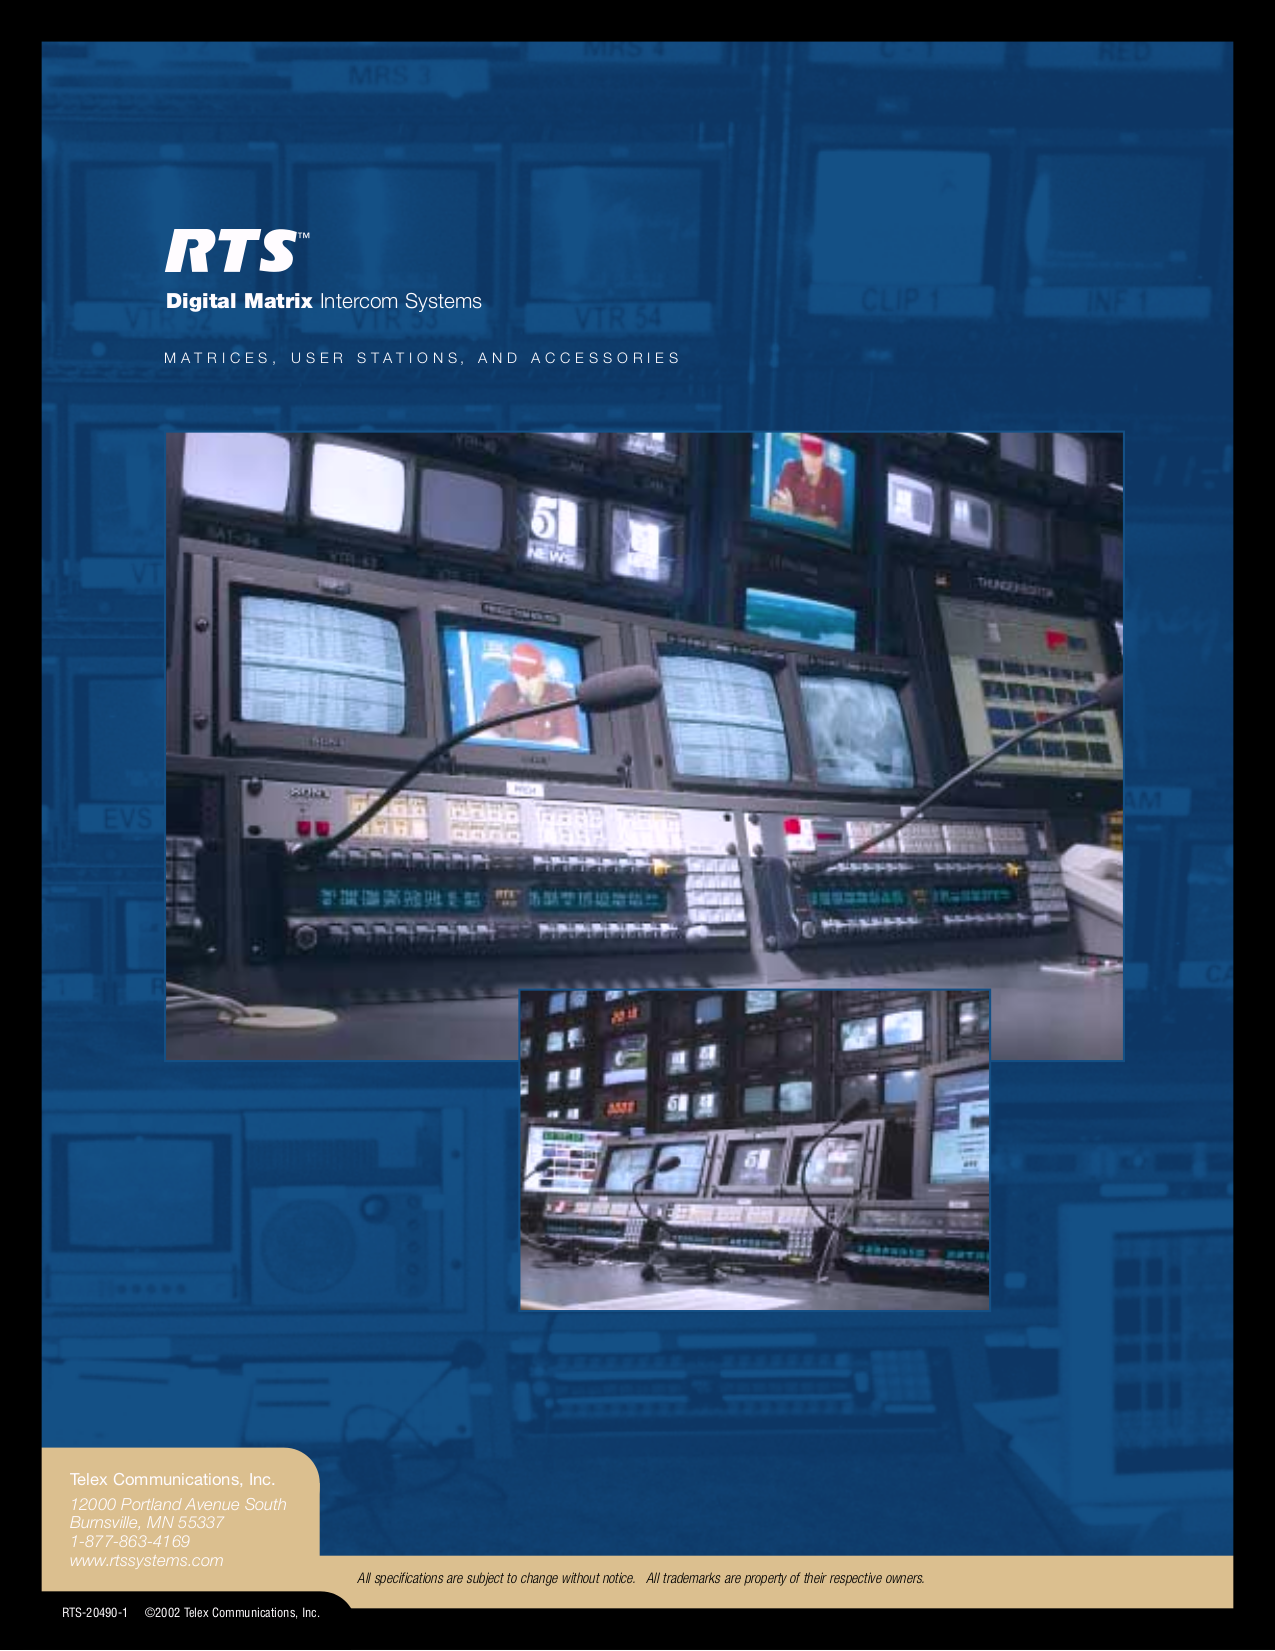 pdf for Telex Other WKP-4 IntercomSystem manual